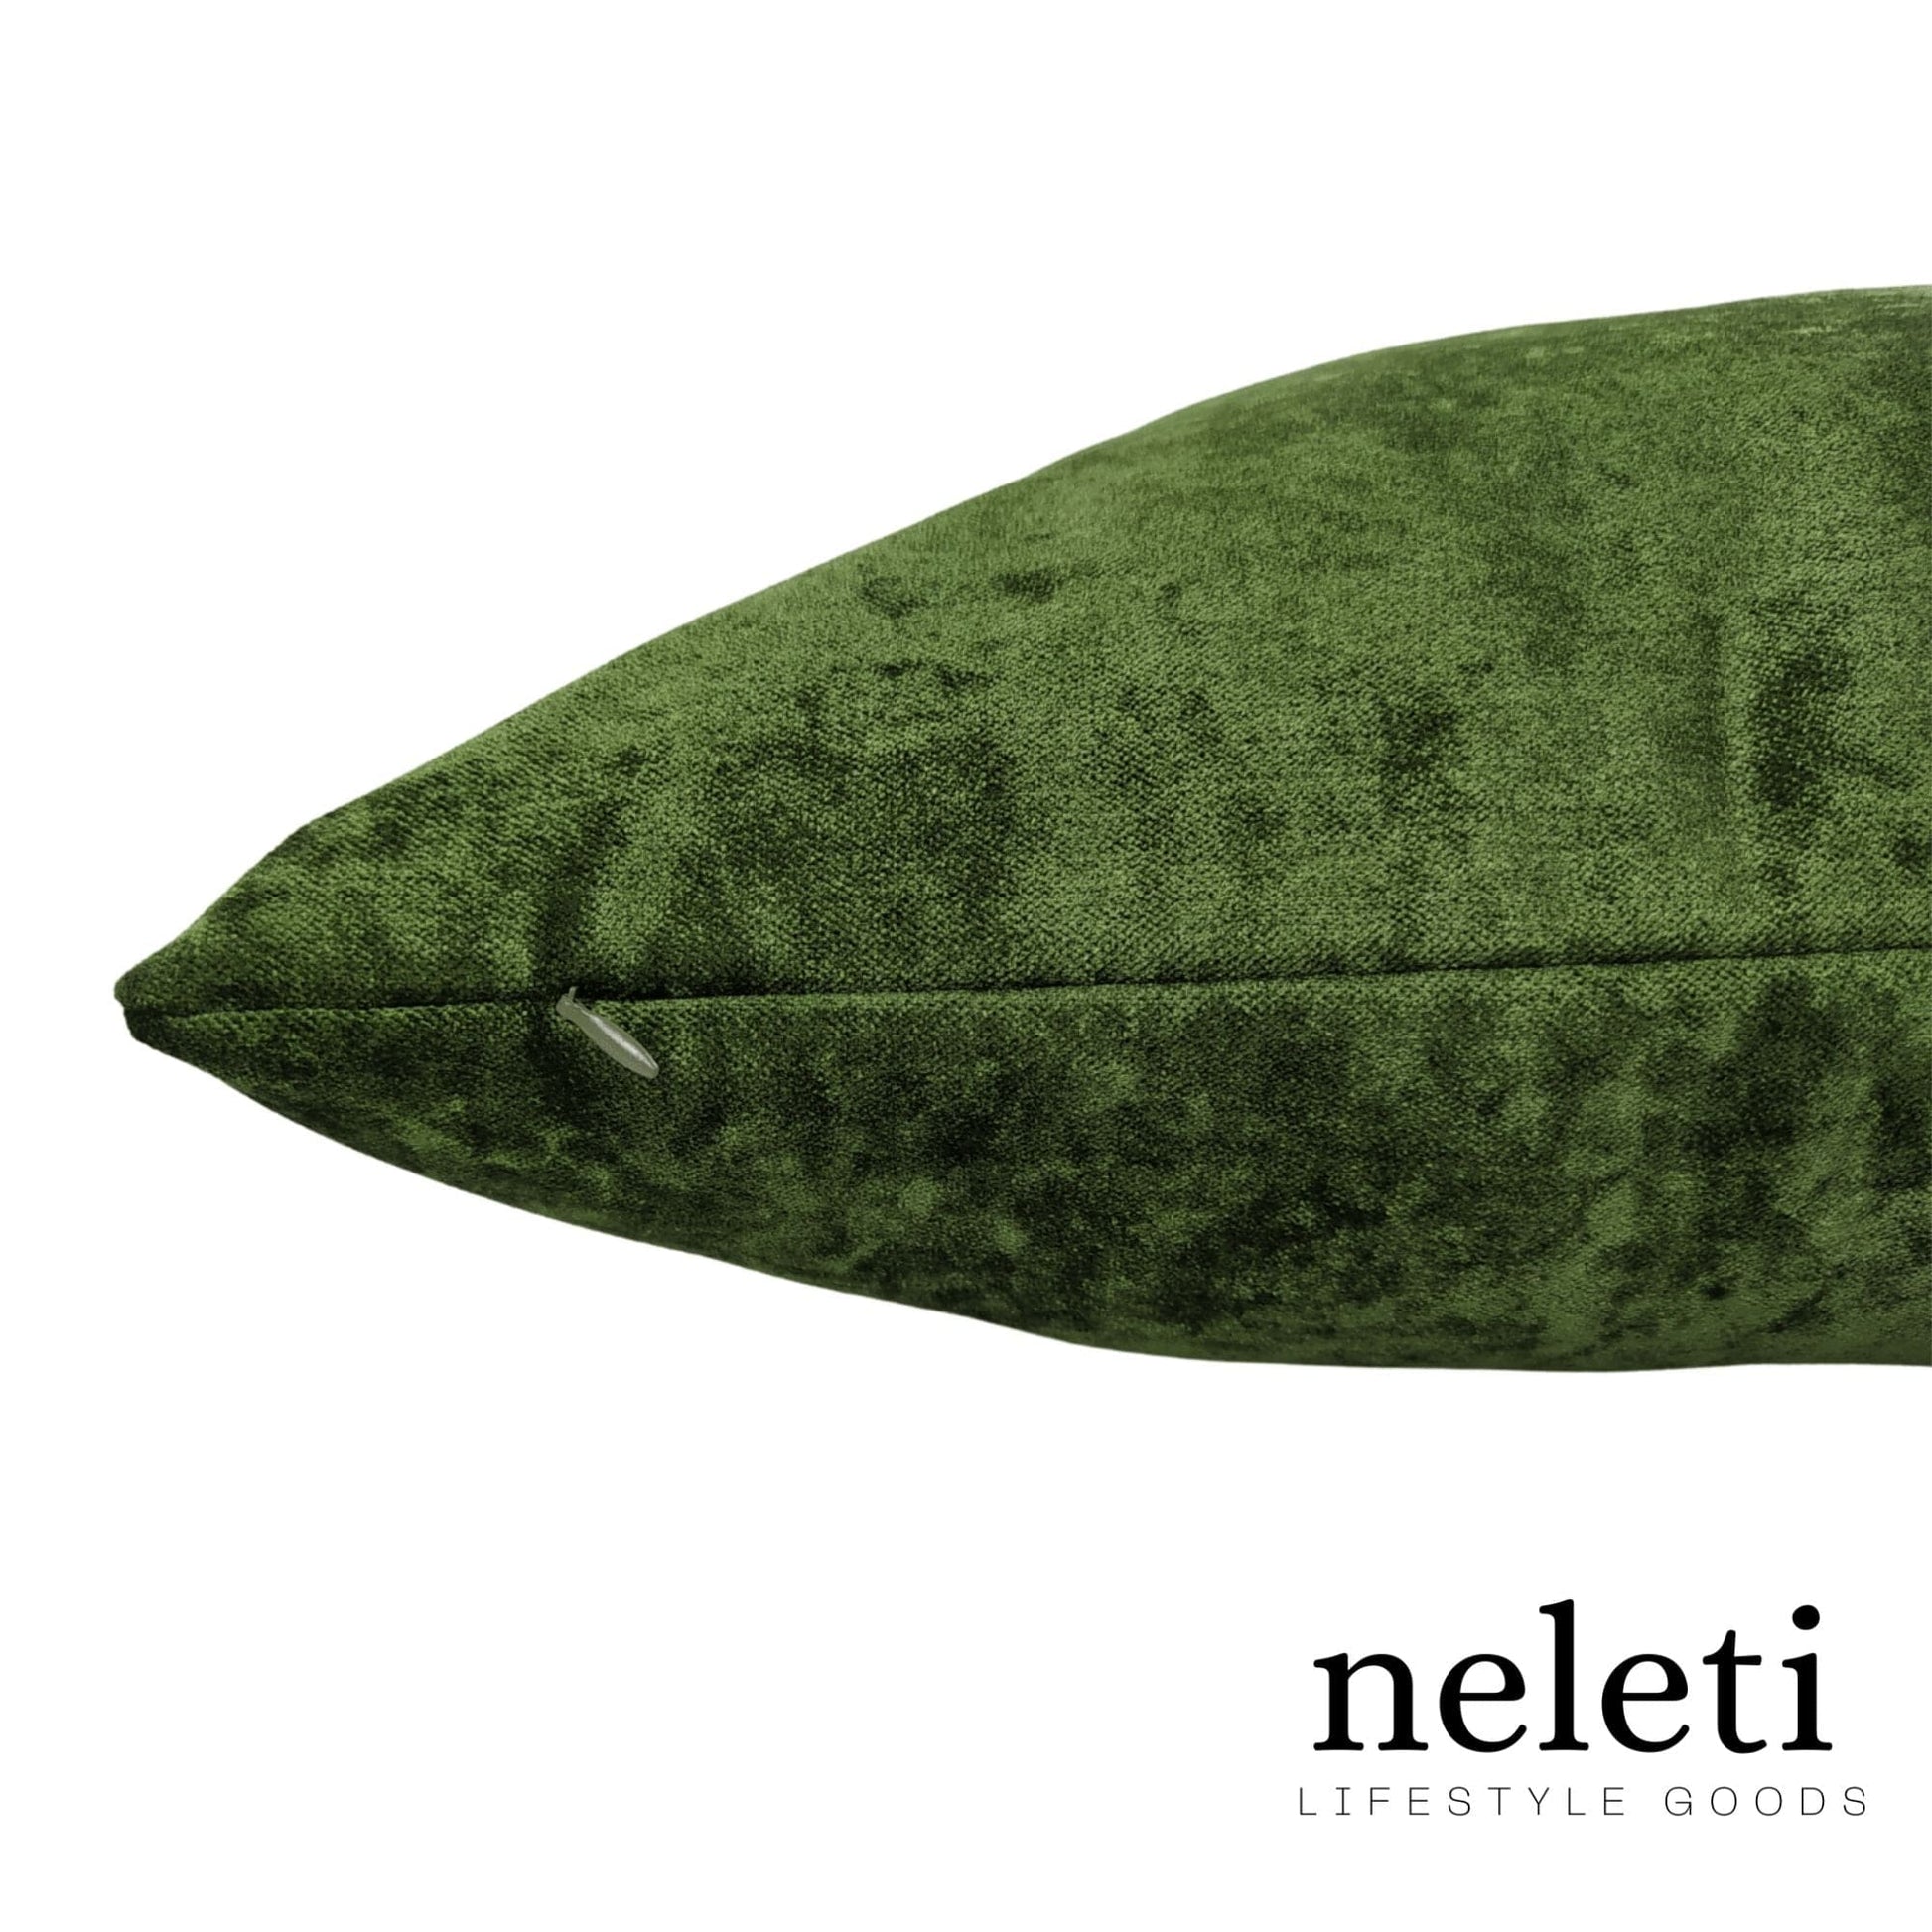 neleti.com-moss-green-chenille-throw-pillow-cover